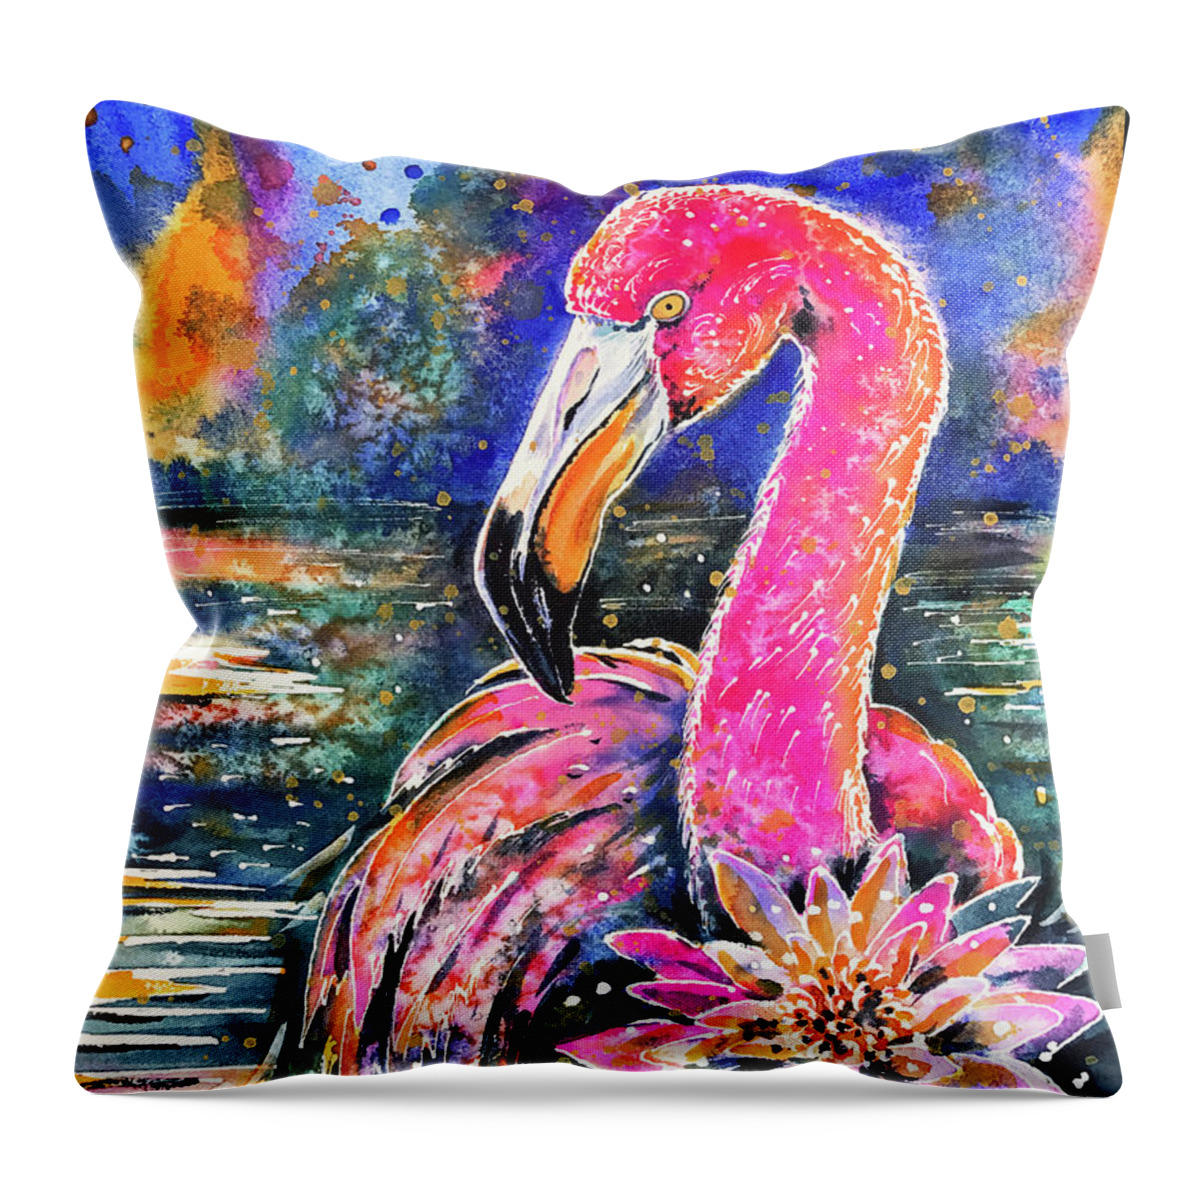 Flamingo Throw Pillow featuring the painting Water Lily and Flamingo by Zaira Dzhaubaeva